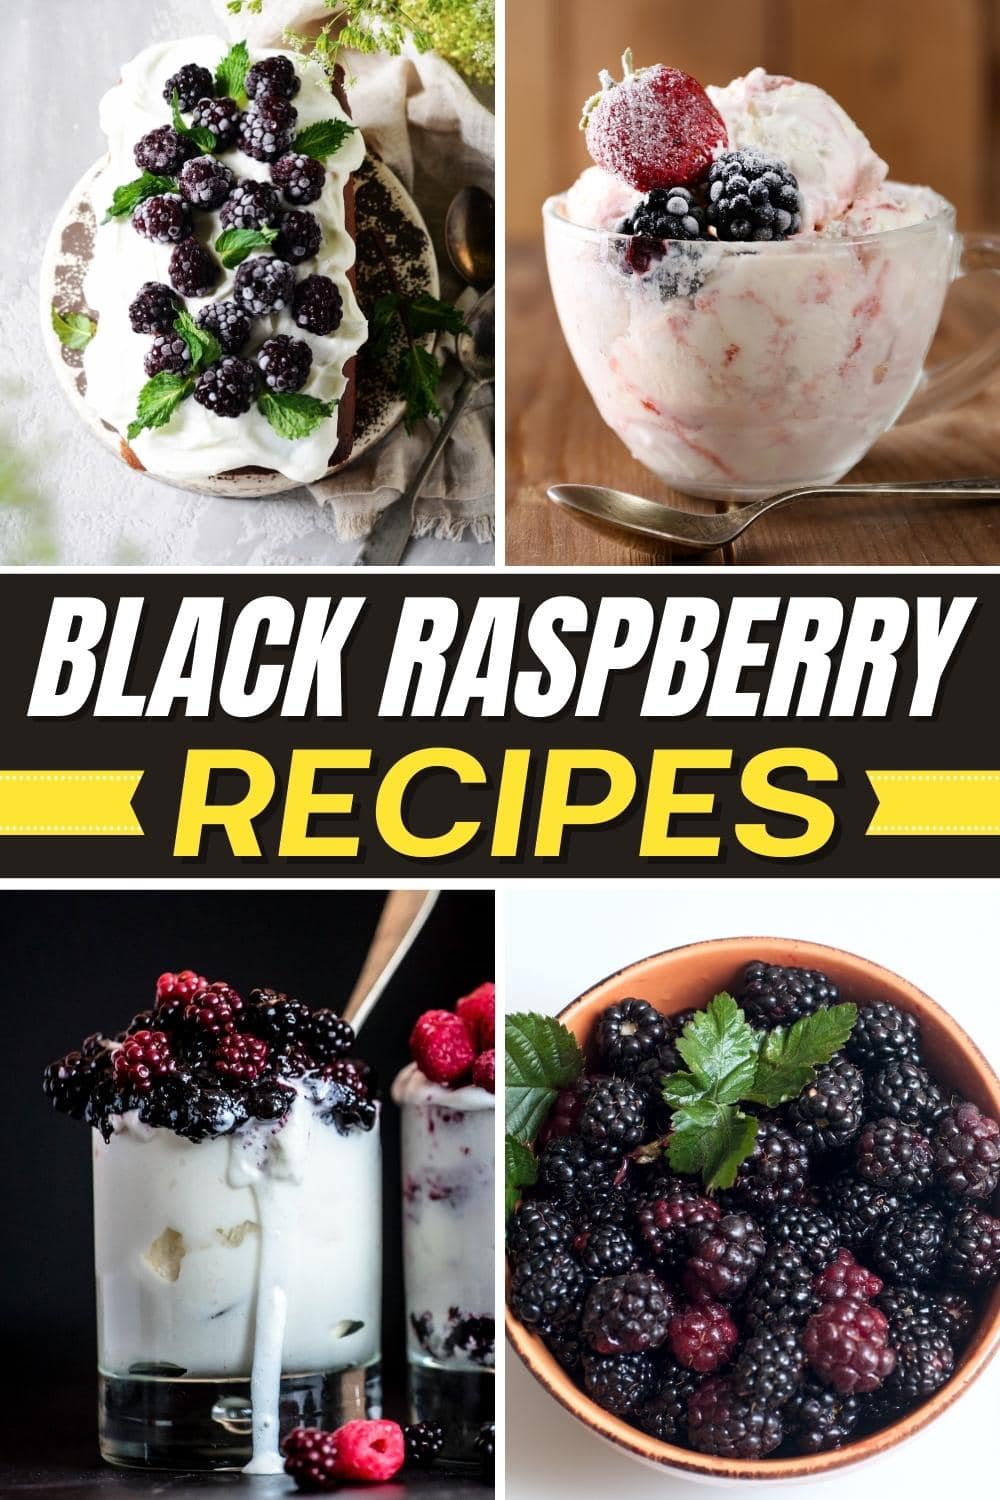 Black Raspberry Recipes 2 